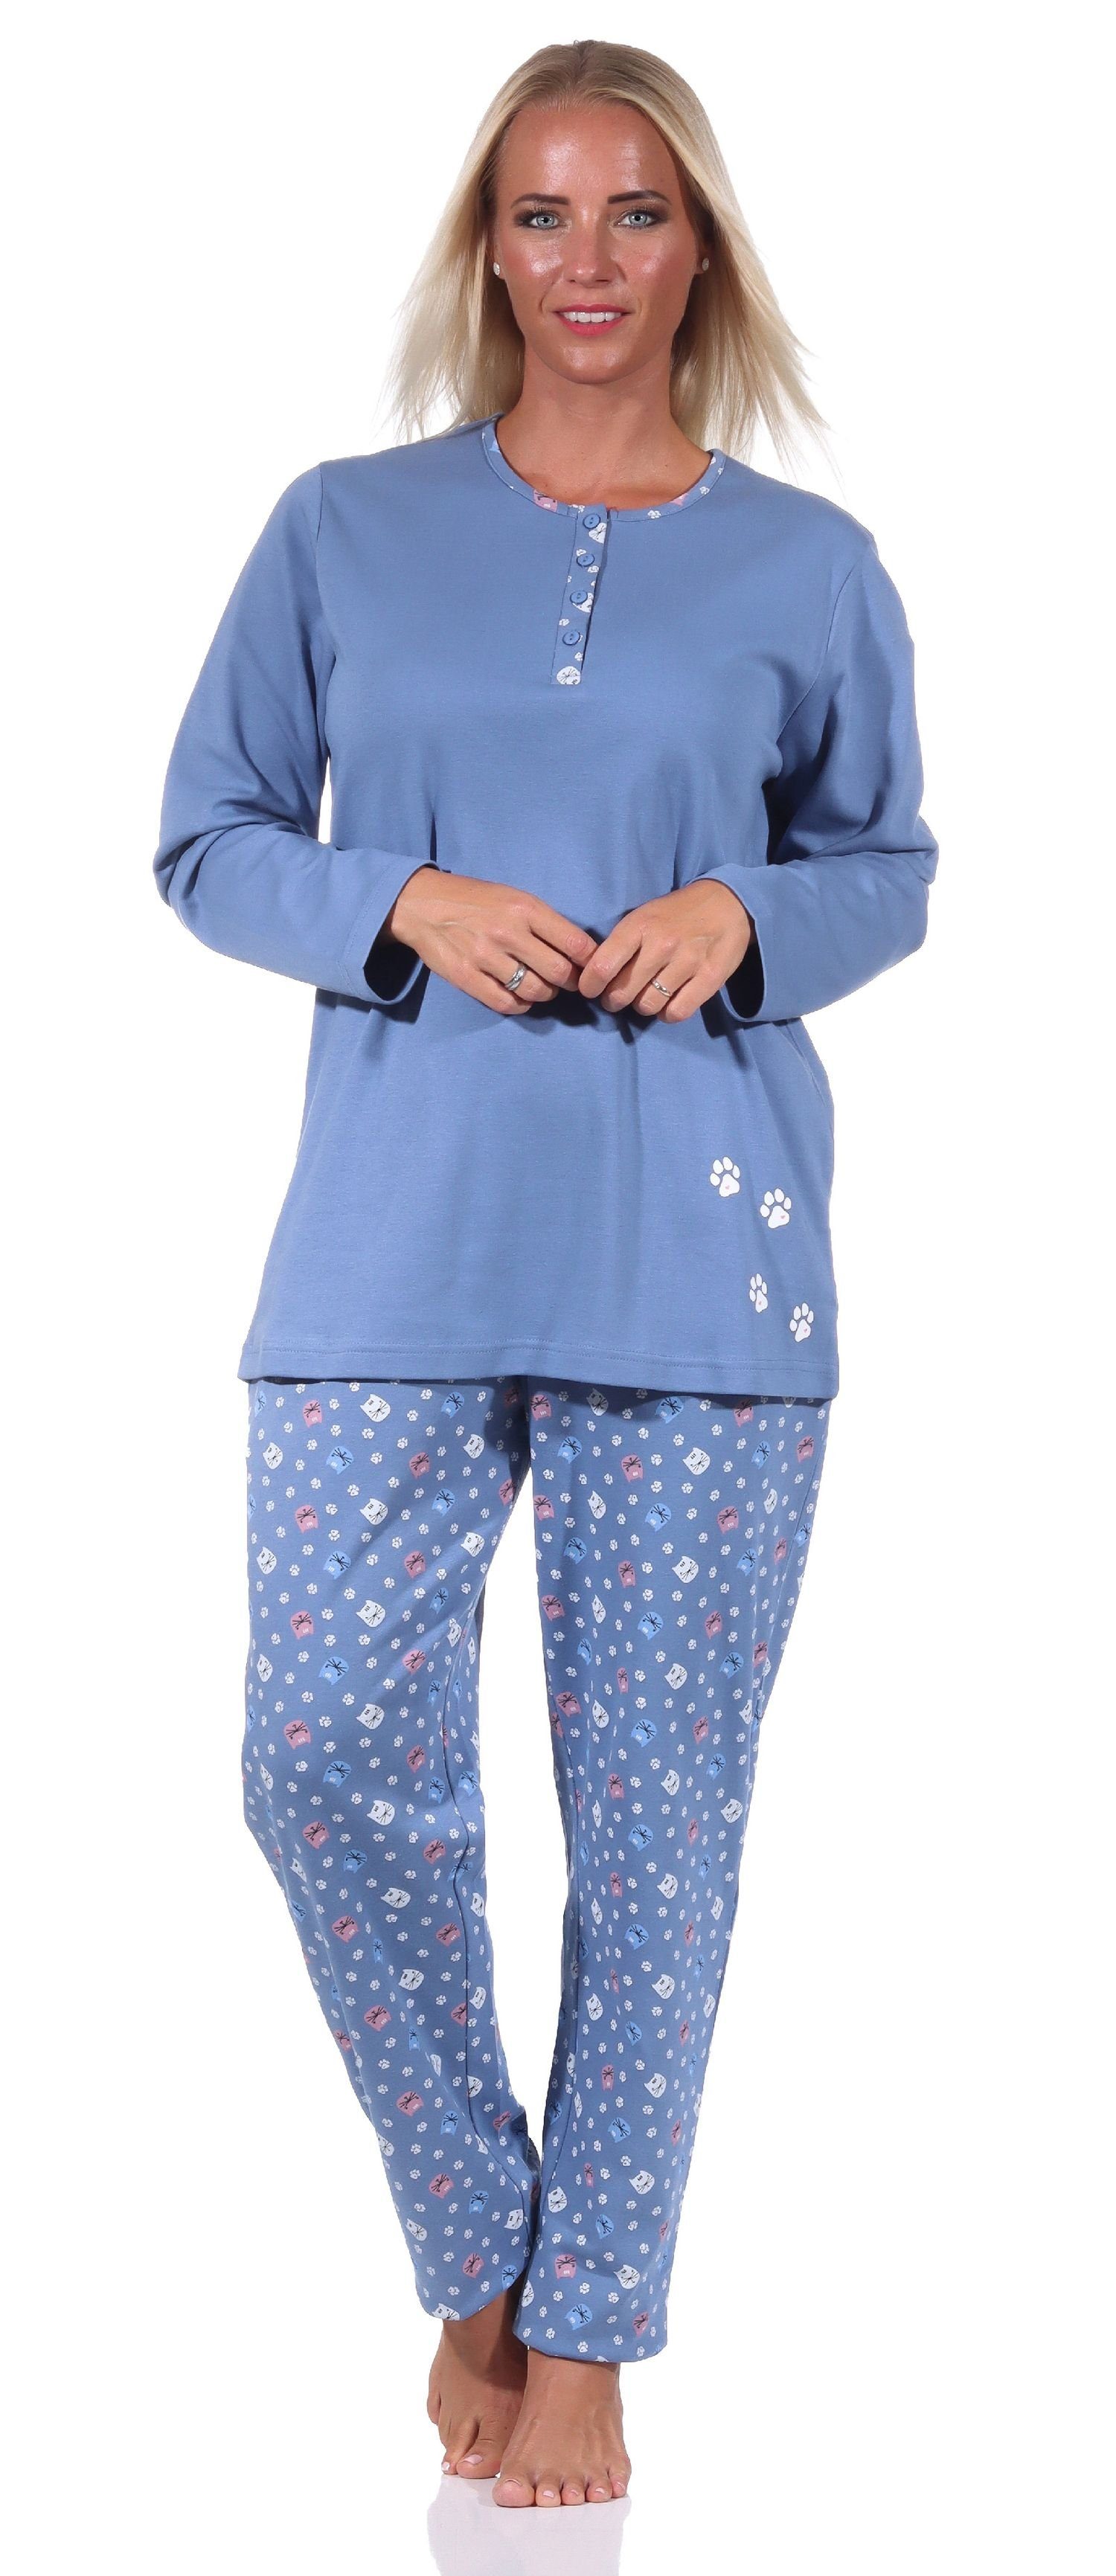 Normann Pyjama Damen Pyjama langarm Schlafanzug mit niedlichem Tier Motiv blau